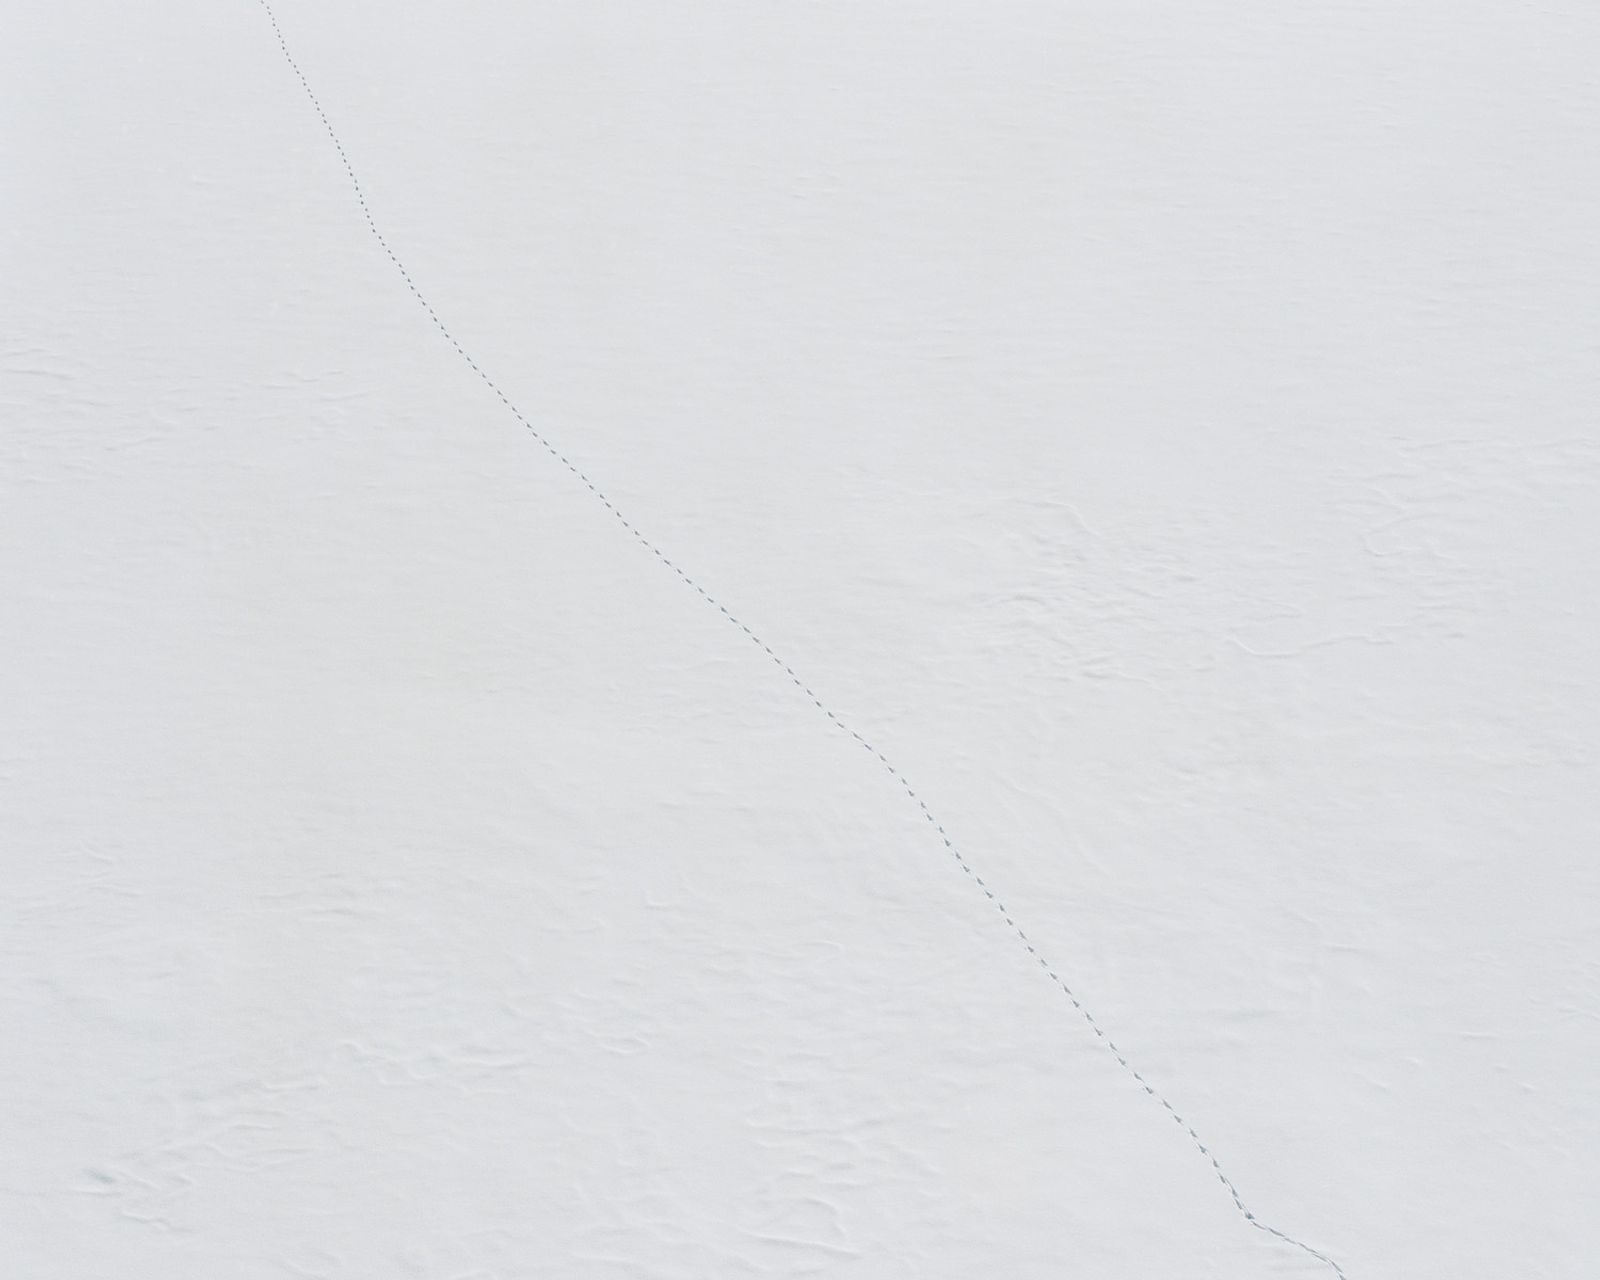 © Nicholas J.R. White - Animal tracks on a frozen Pecineagu Lake, Izvorul Dambovitei Hunting Area. [January, 2018]